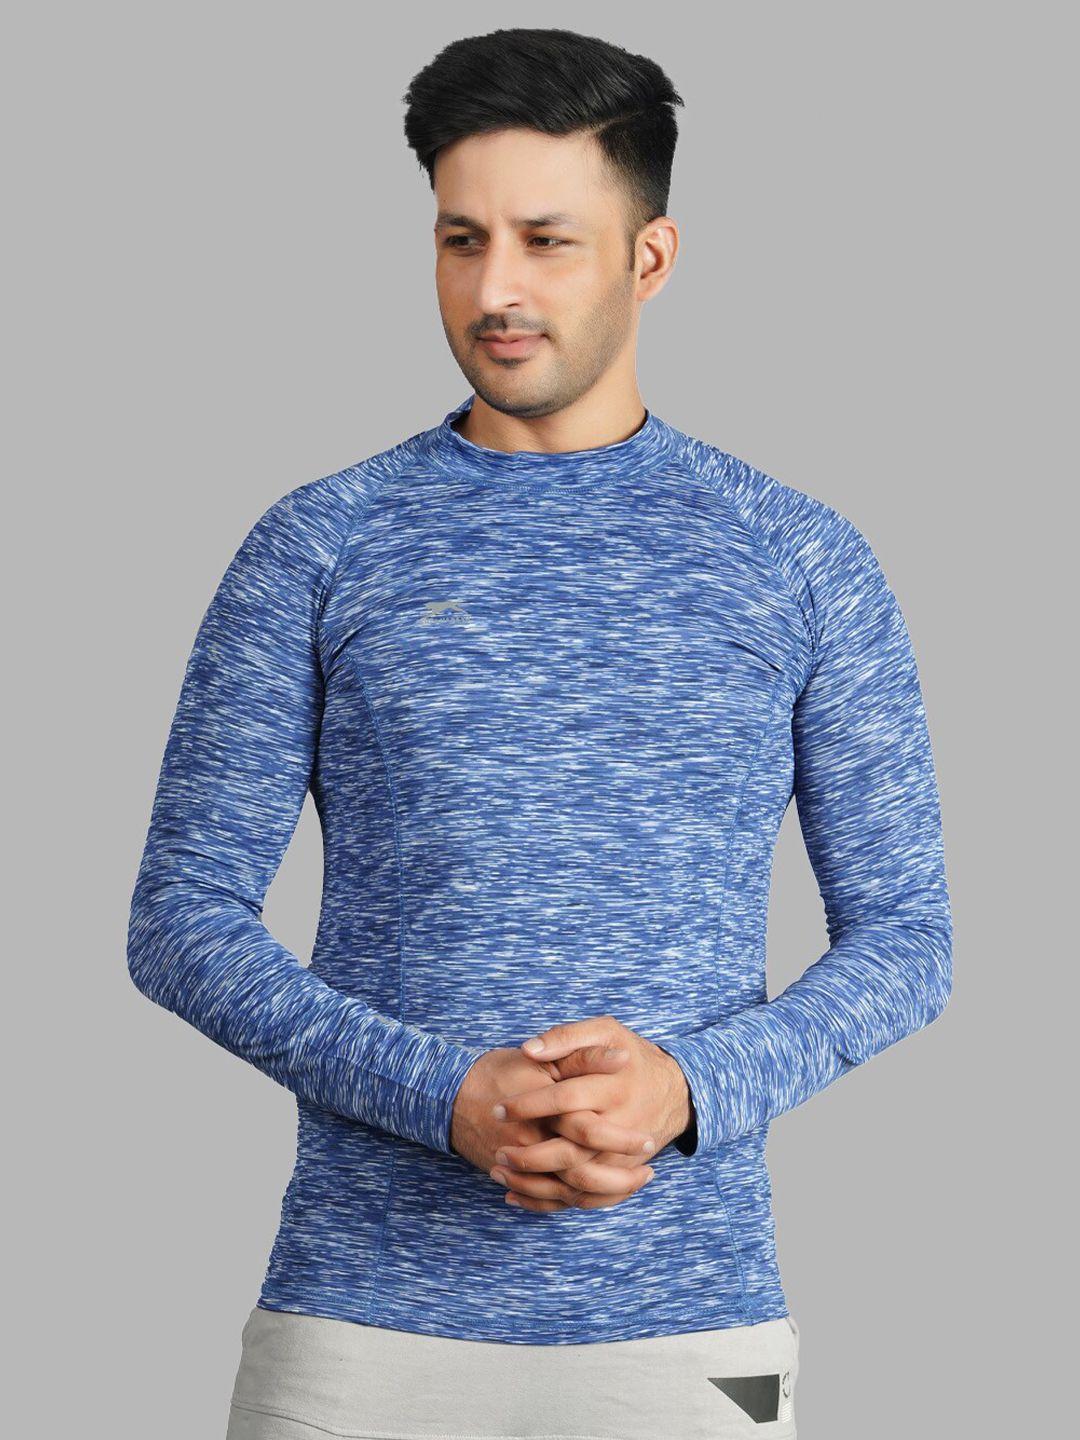 shiv naresh abstract printed raglan sleeves 3d chassis slim fit training or gym t-shirt